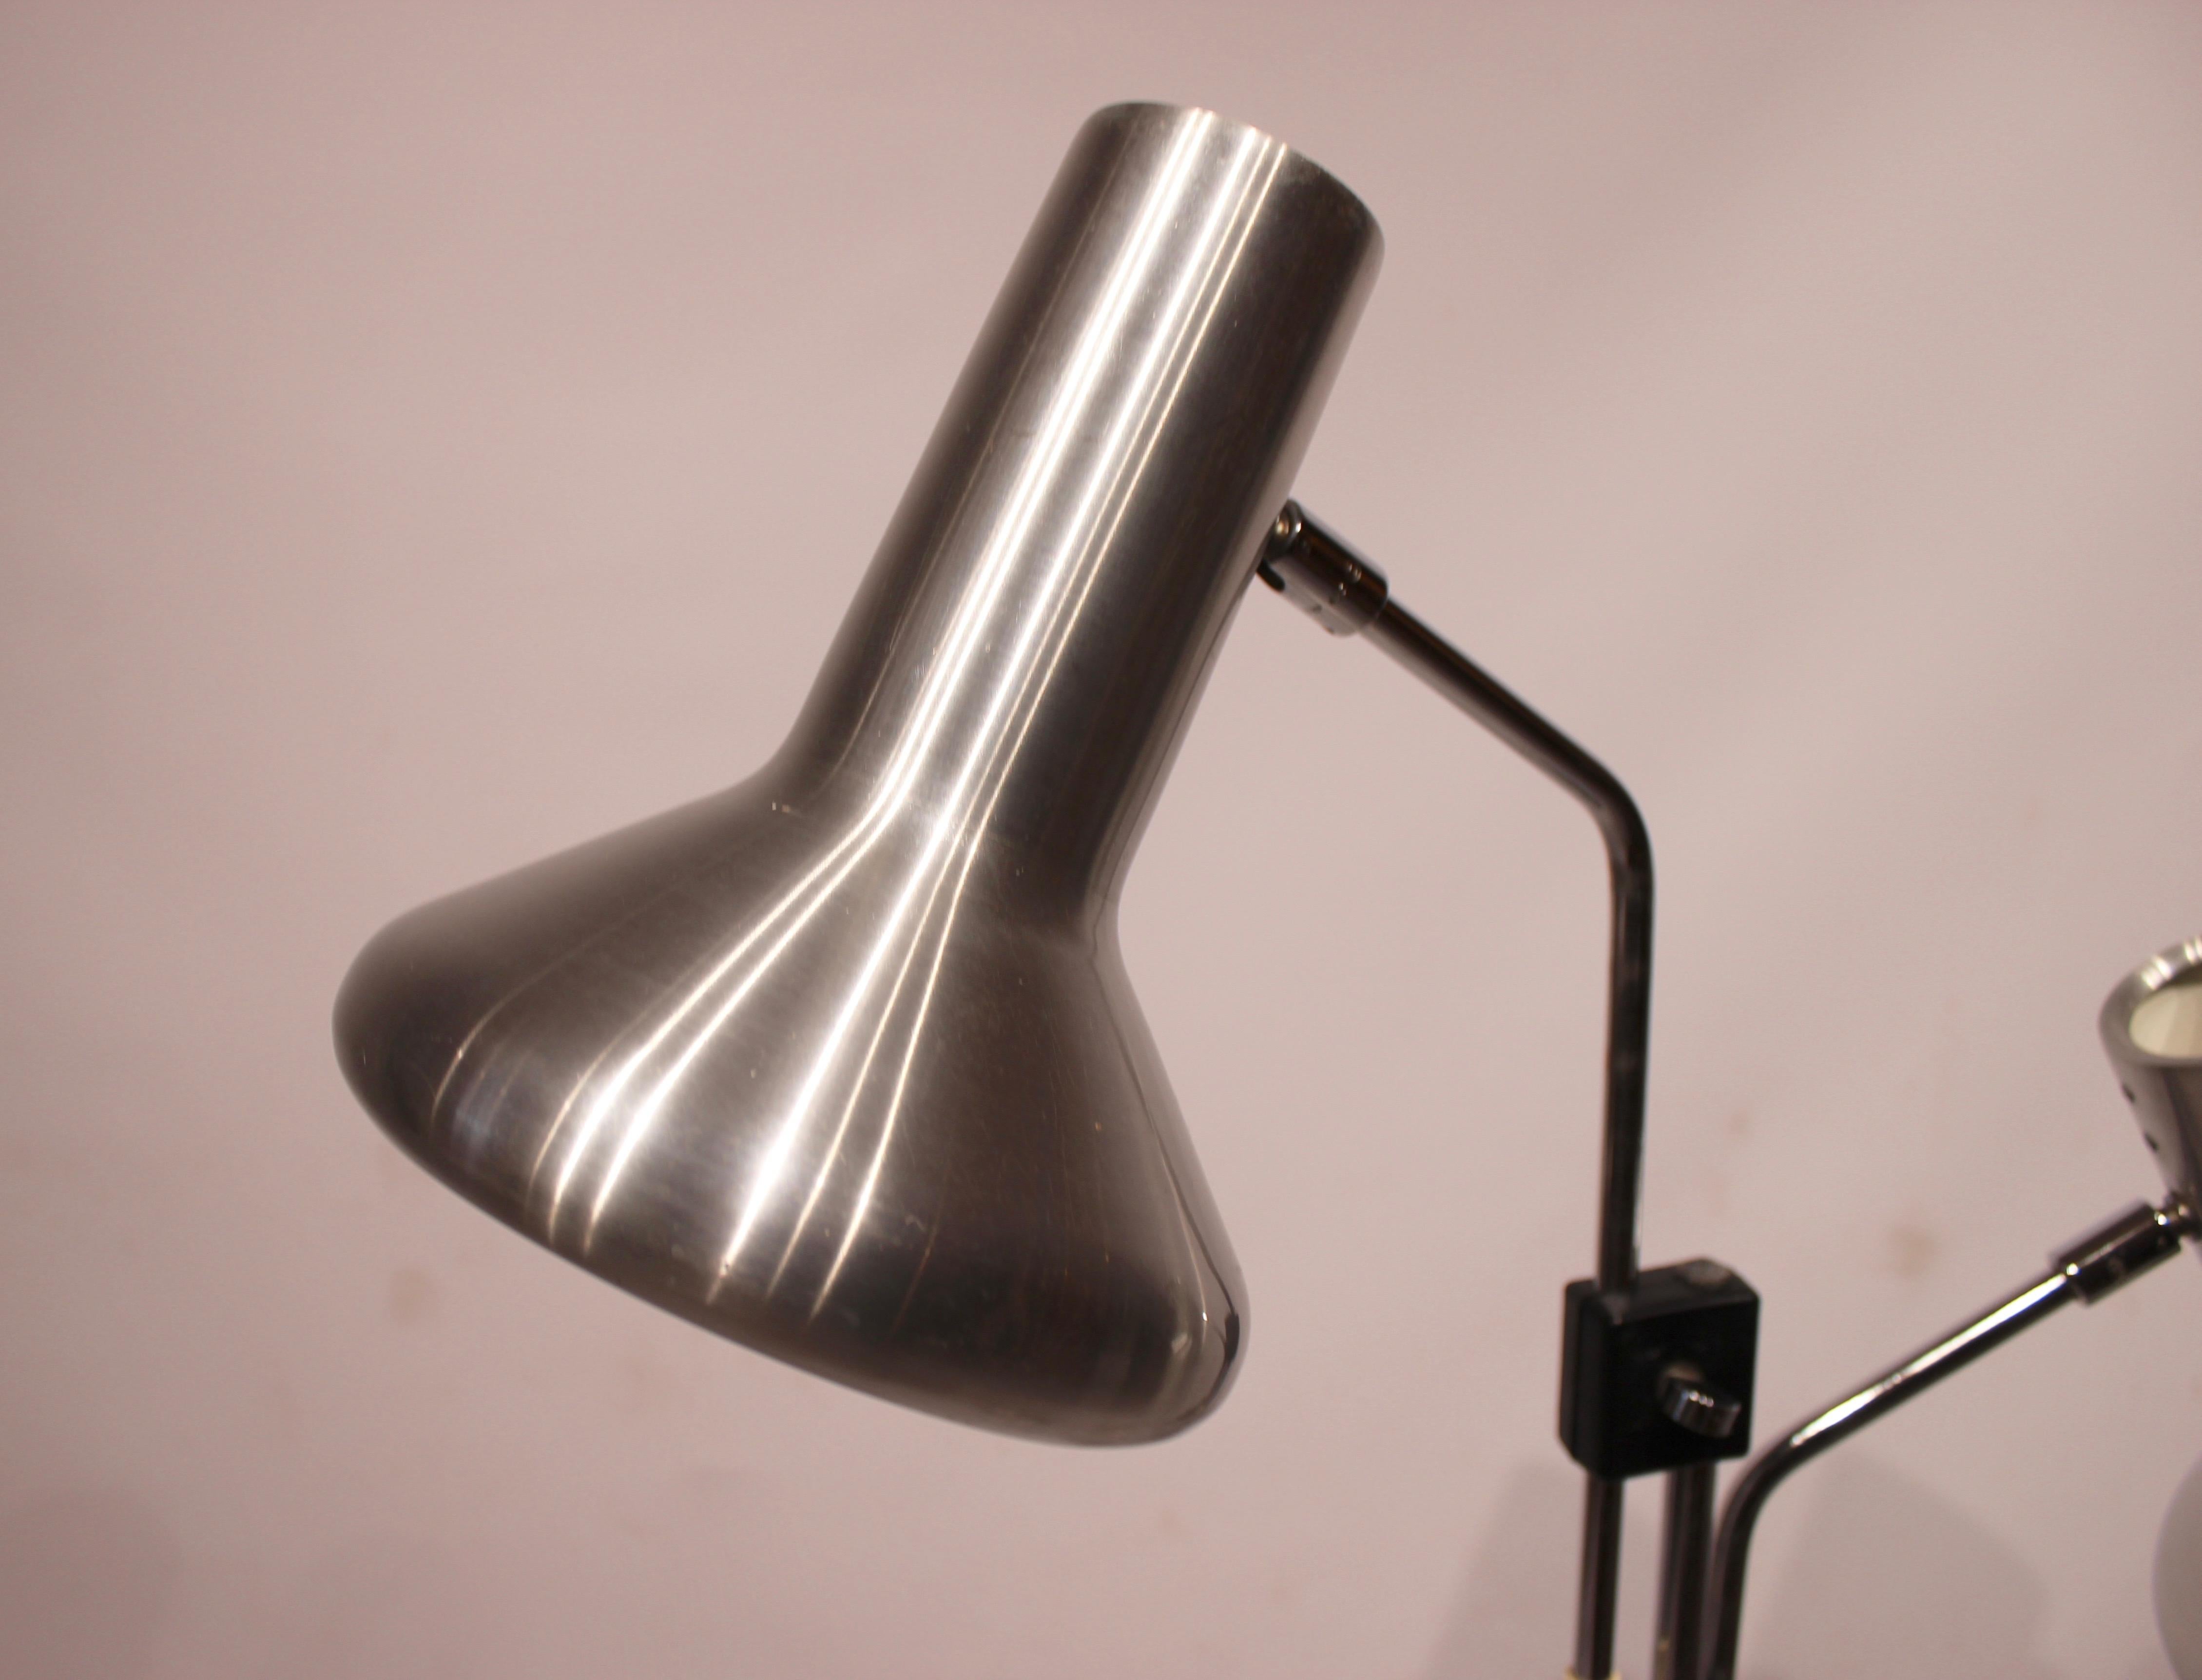 Mid-Century Modern Floor Lamp Made In Steel, Danish Design From 1960s For Sale